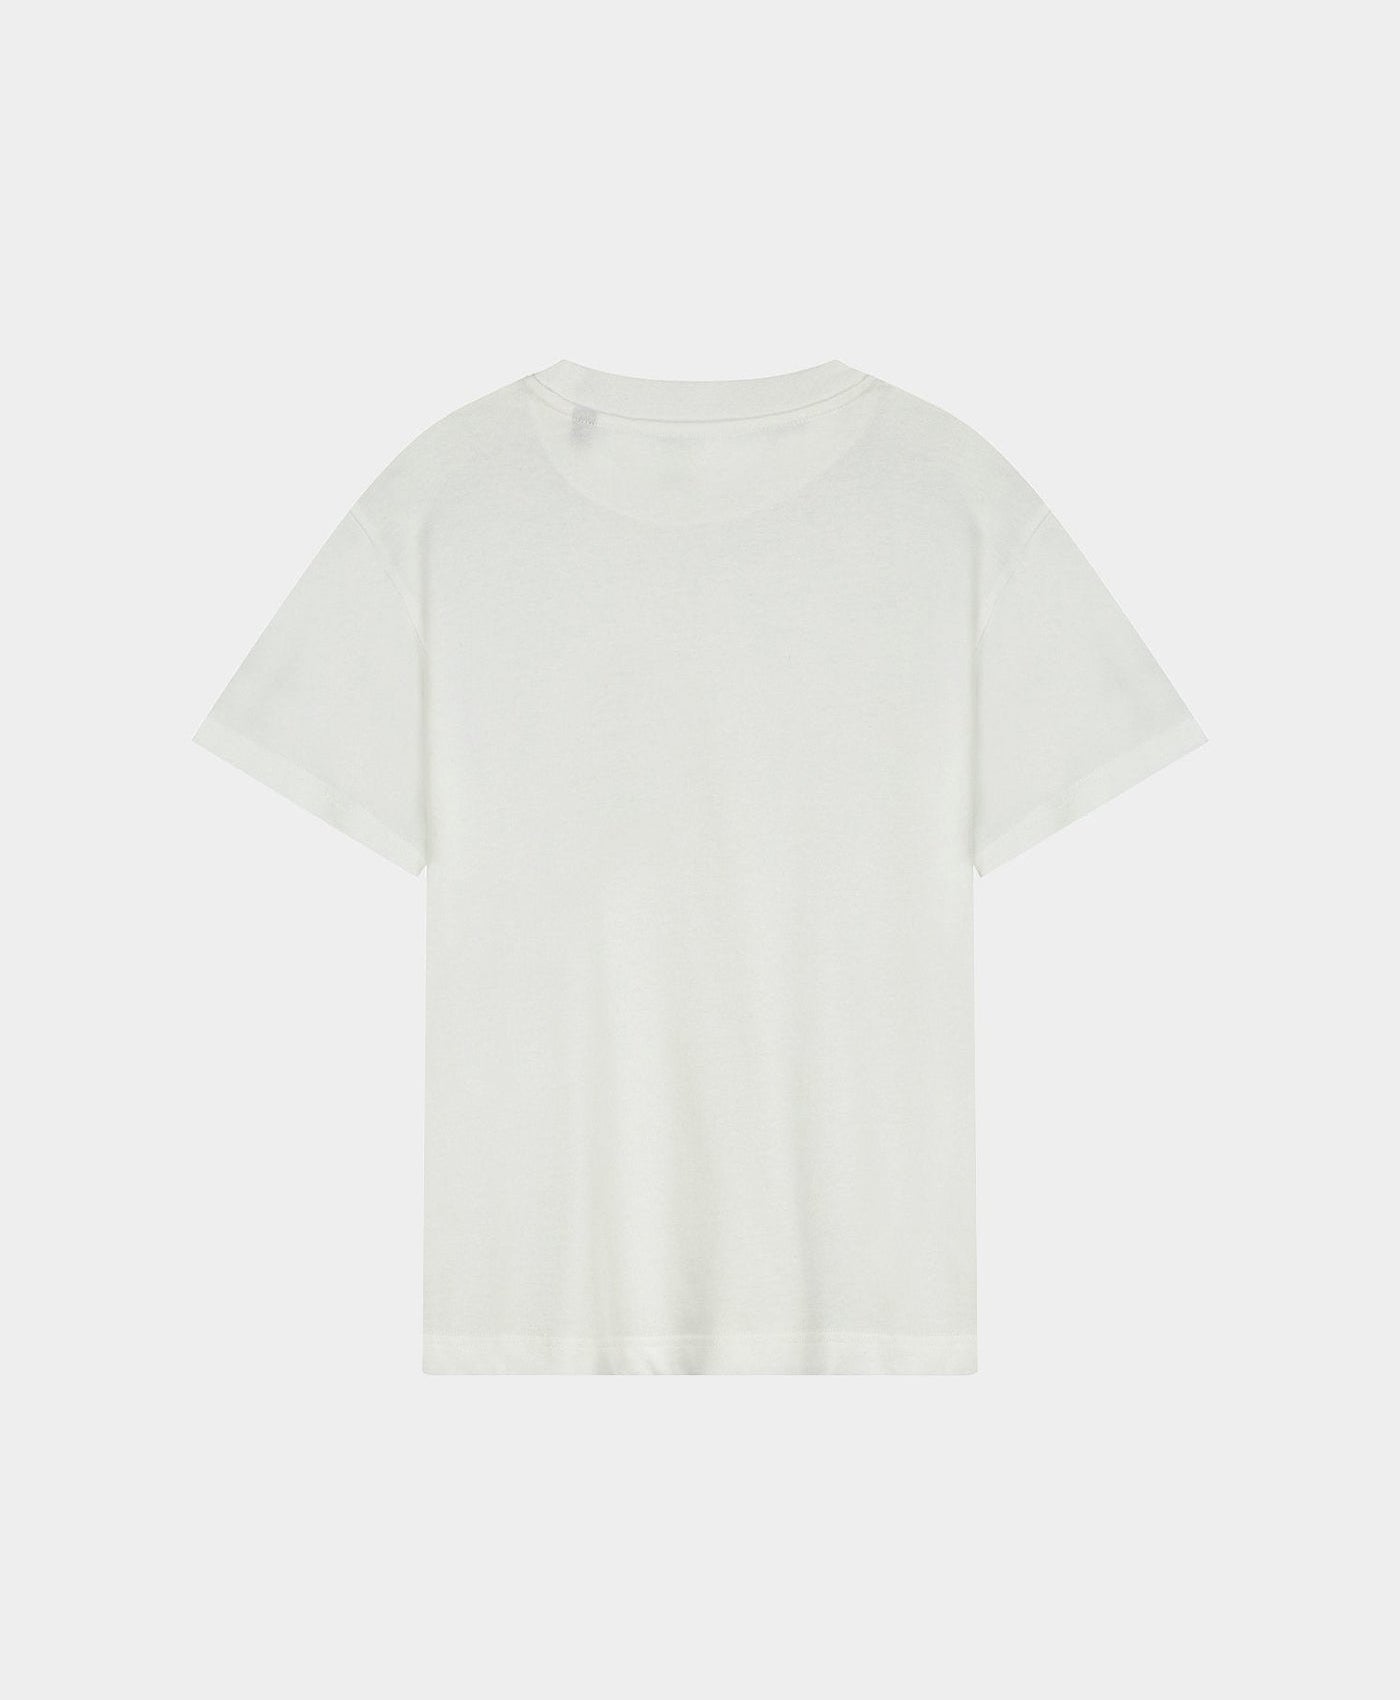 DP - White Estan T-Shirt - Packshot - Rear